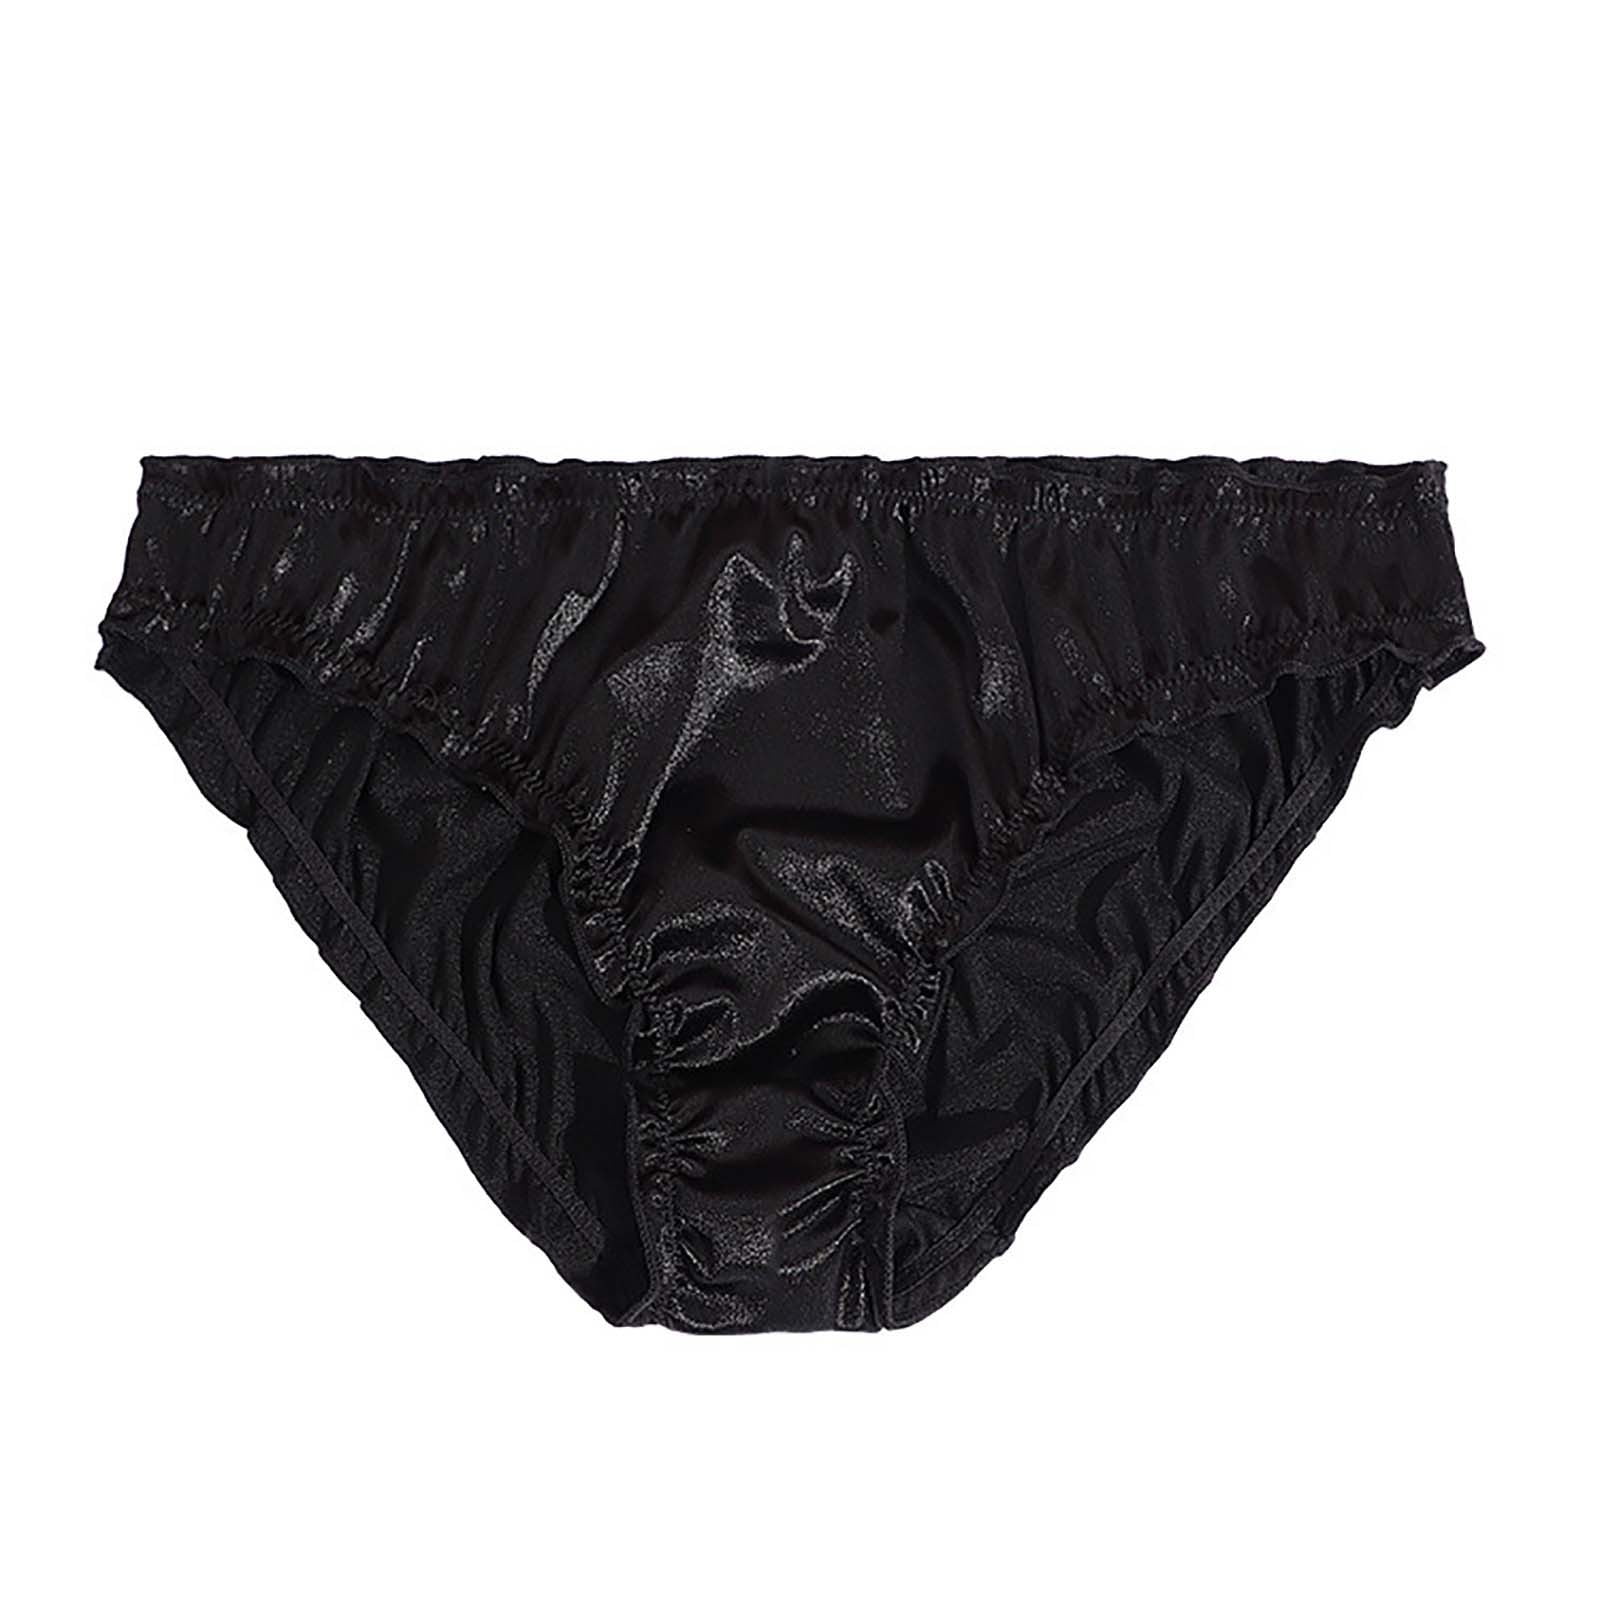 HUPOM Period Thong Underwear For Women Girls Panties Briefs